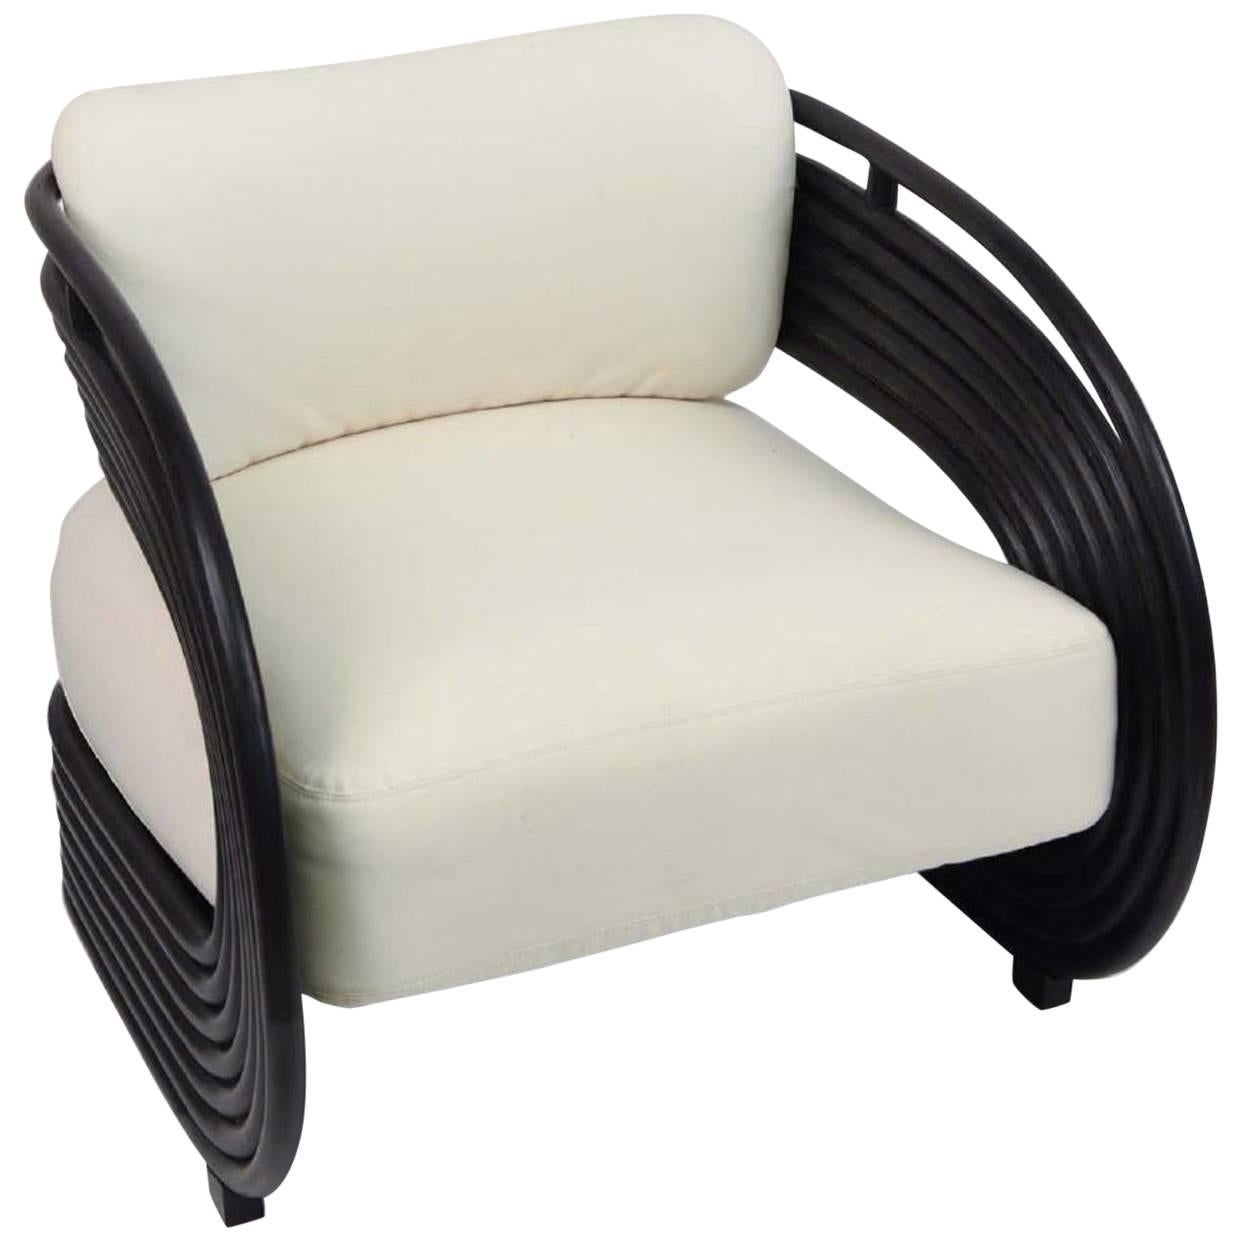 Bonacina Nastro Chair